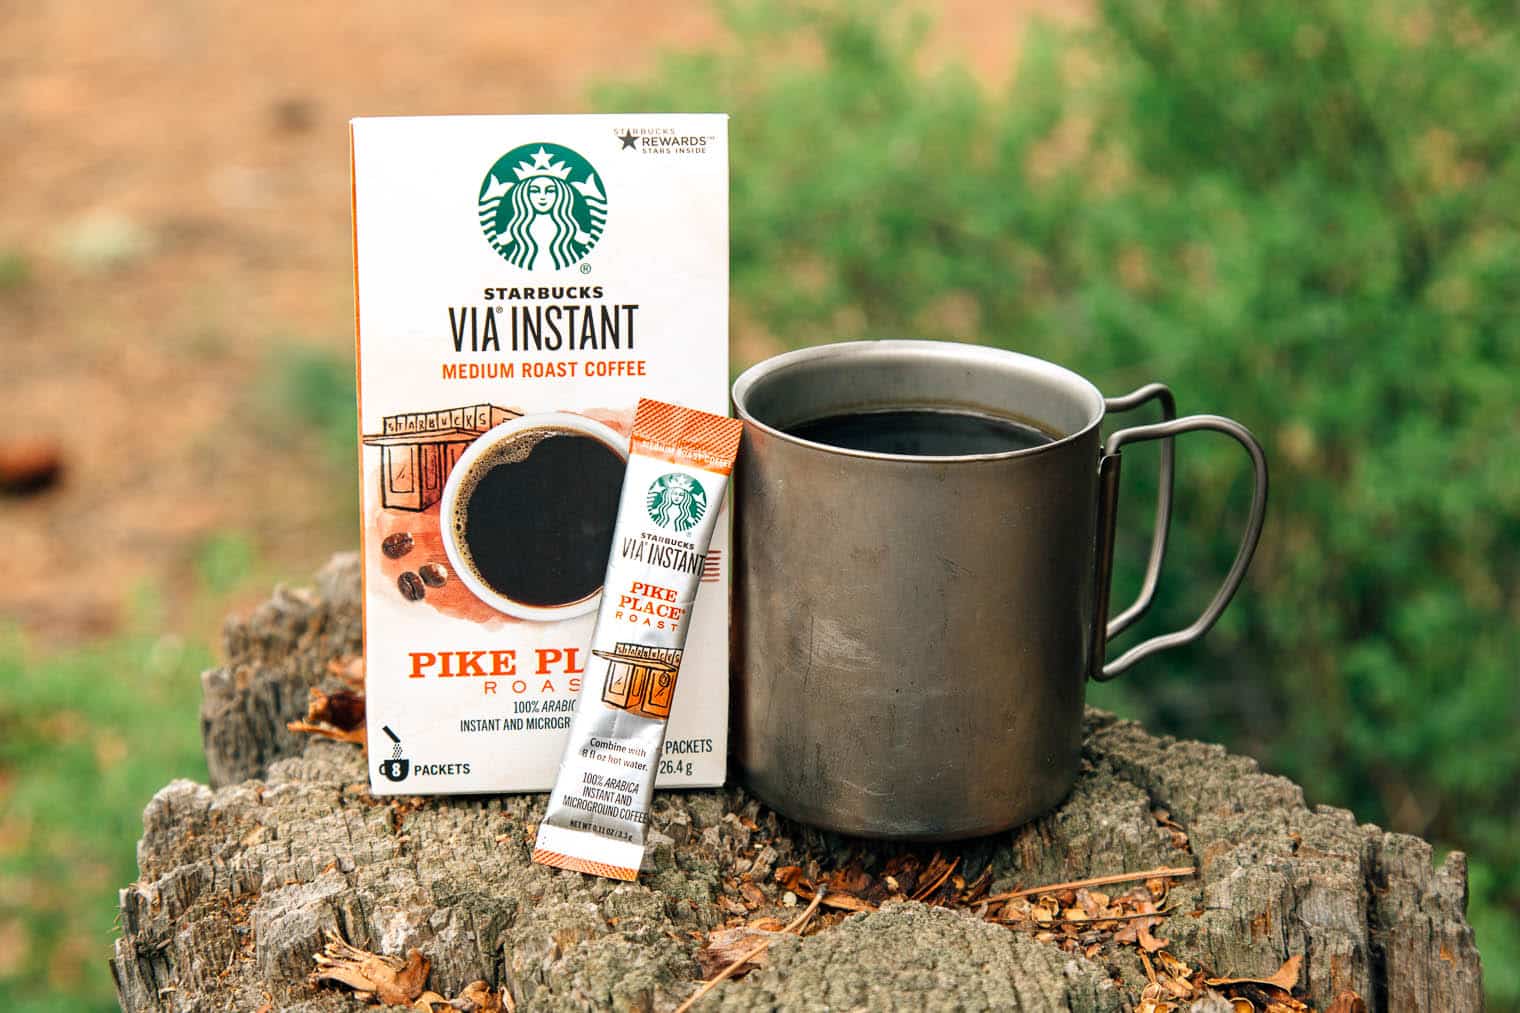 Starbucks Via instant coffee packaging next to a camp mug